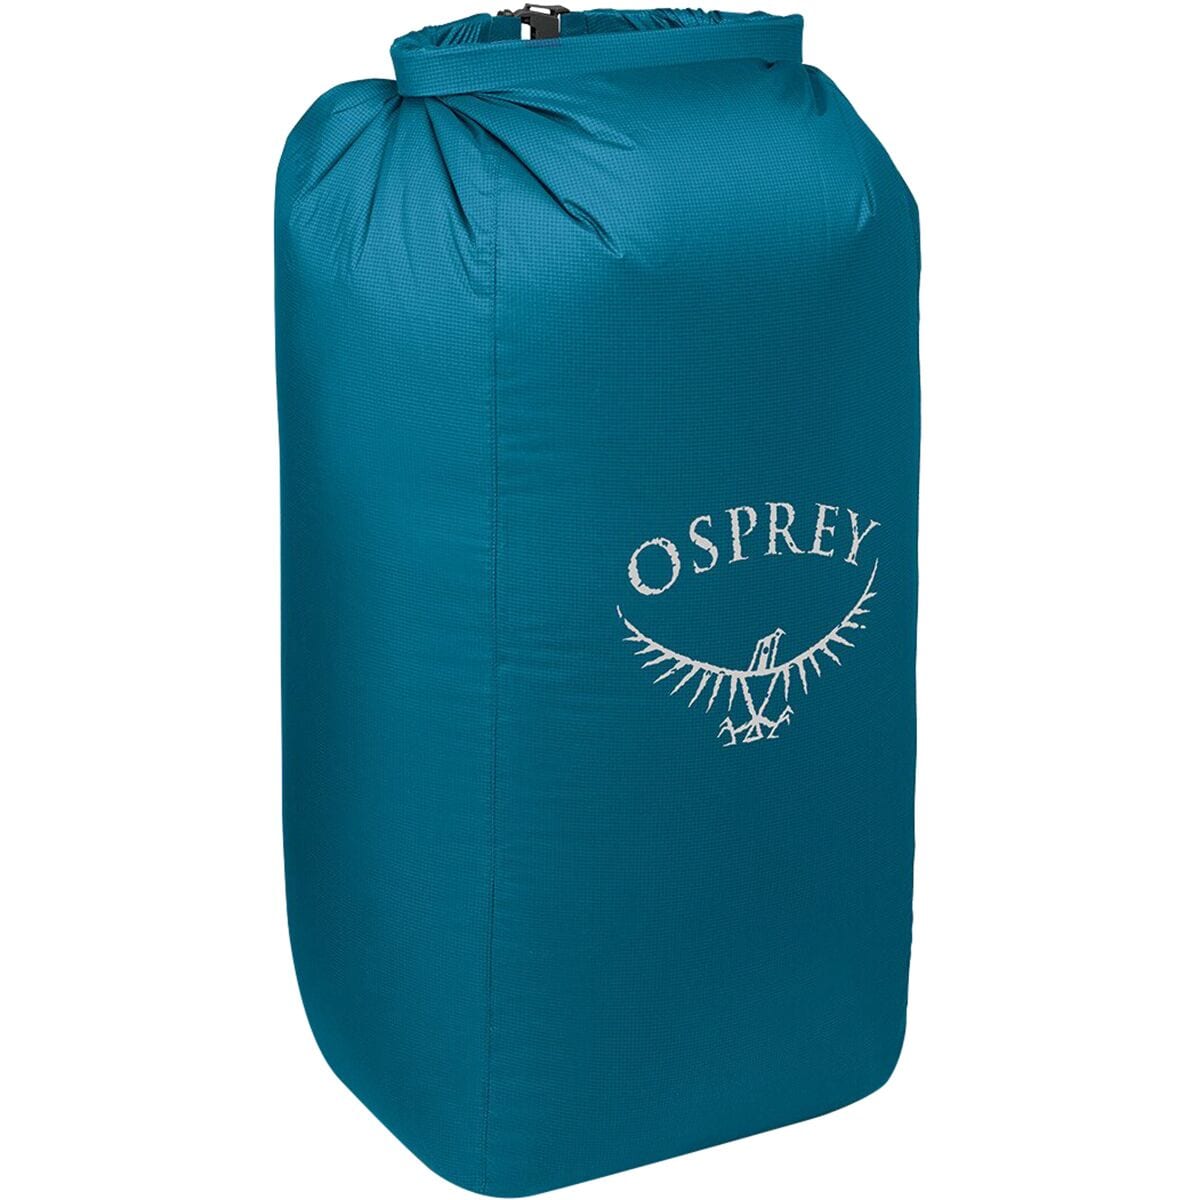 Osprey Packs Ultralight Backpack Liners